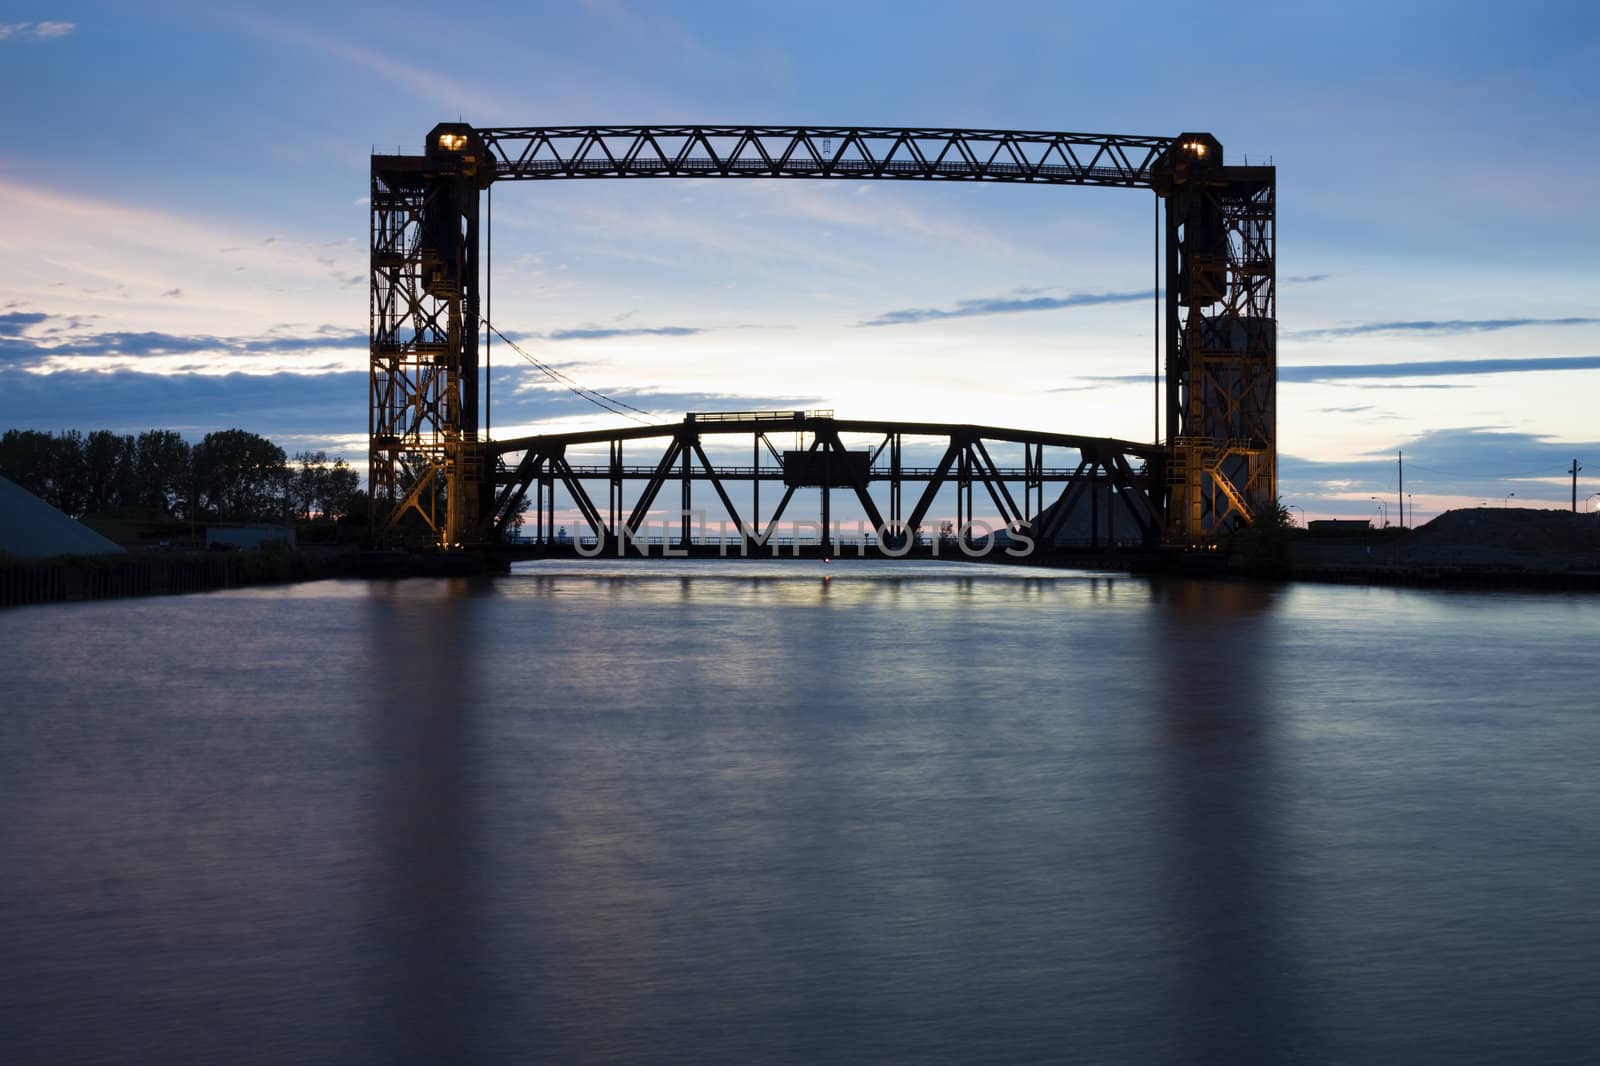 Old Bridge in Cleveland by benkrut